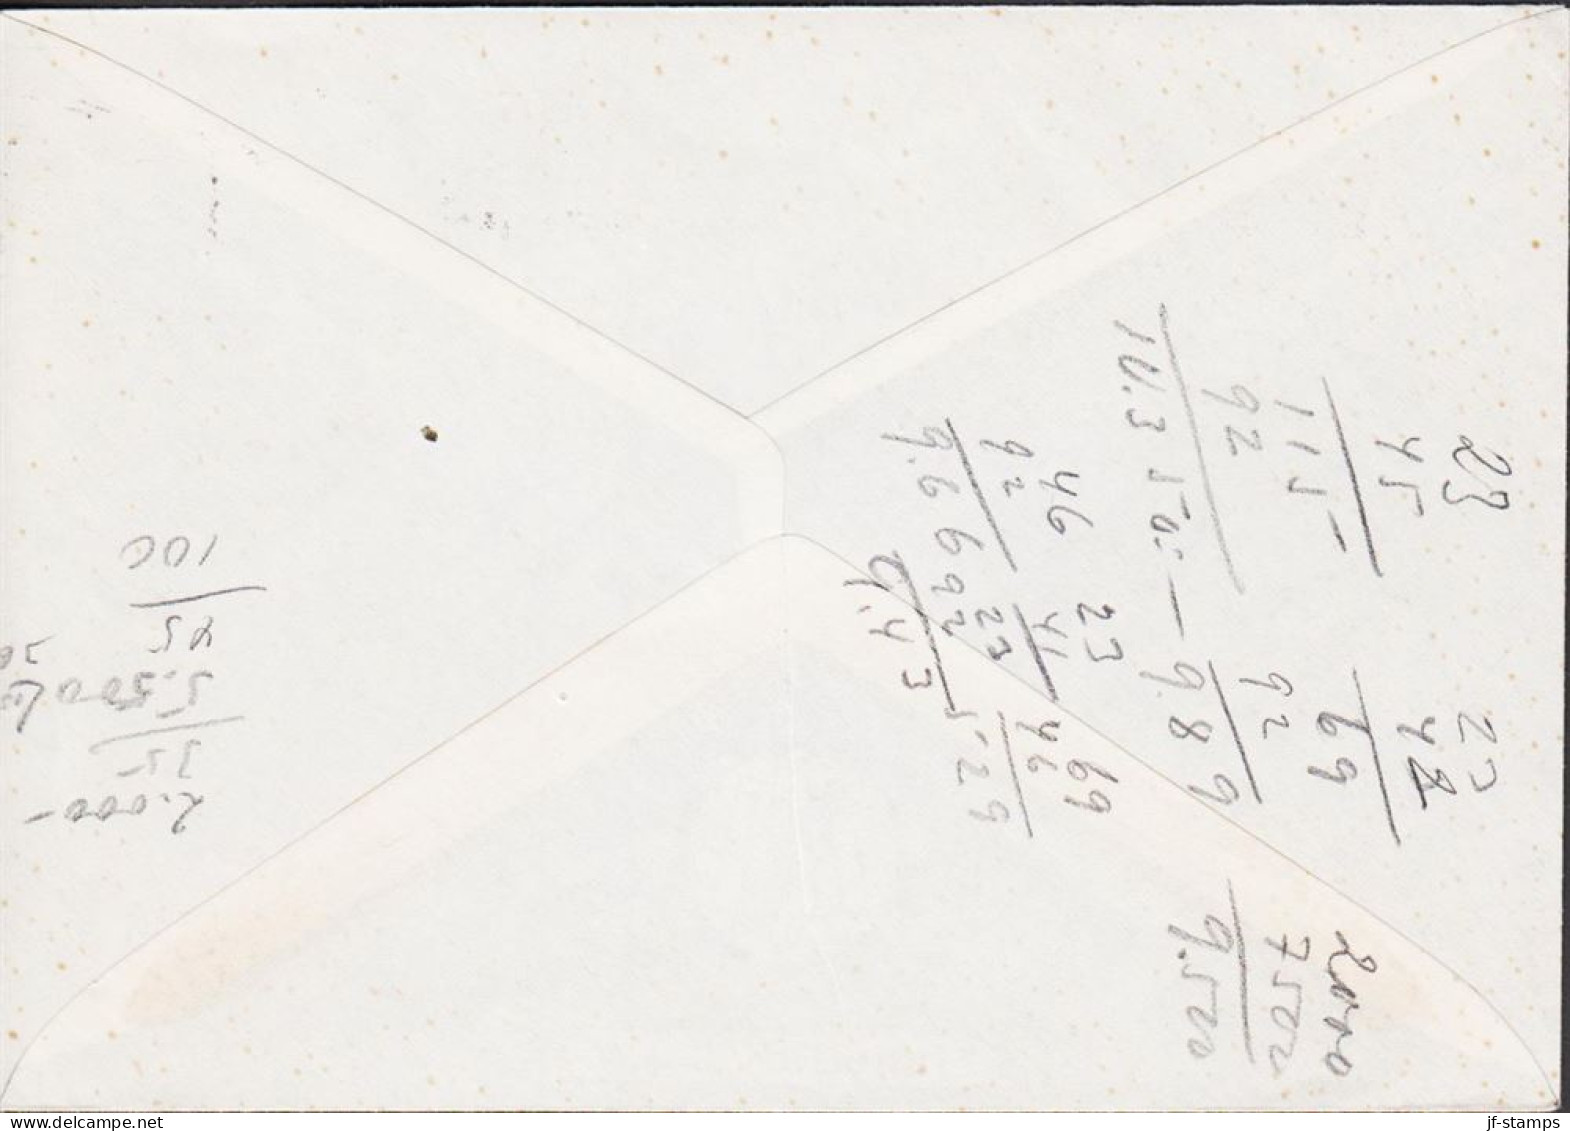 1944. NORGE. Fine Envelope To Sverige With 20+30 ØRE Quisling RIKSTINGET 1942 Cancelled OSLO ... (Michel 271) - JF545672 - Cartas & Documentos